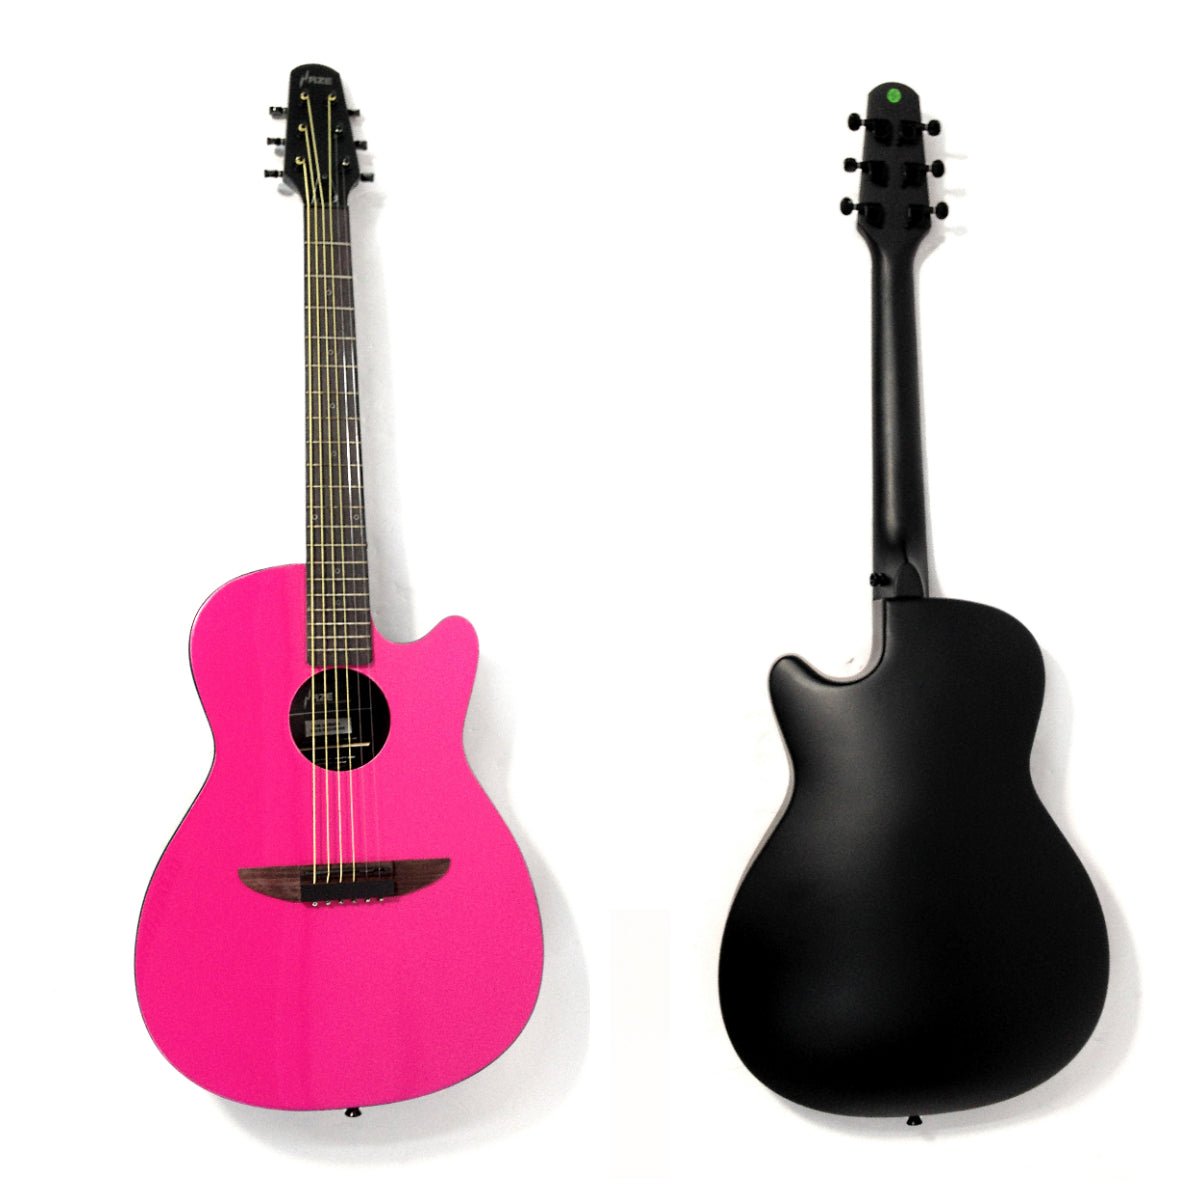 Haze Roundback 3/4 Traveller Built-In Pickups Acoustic Guitar - Pink HSDP836CPK